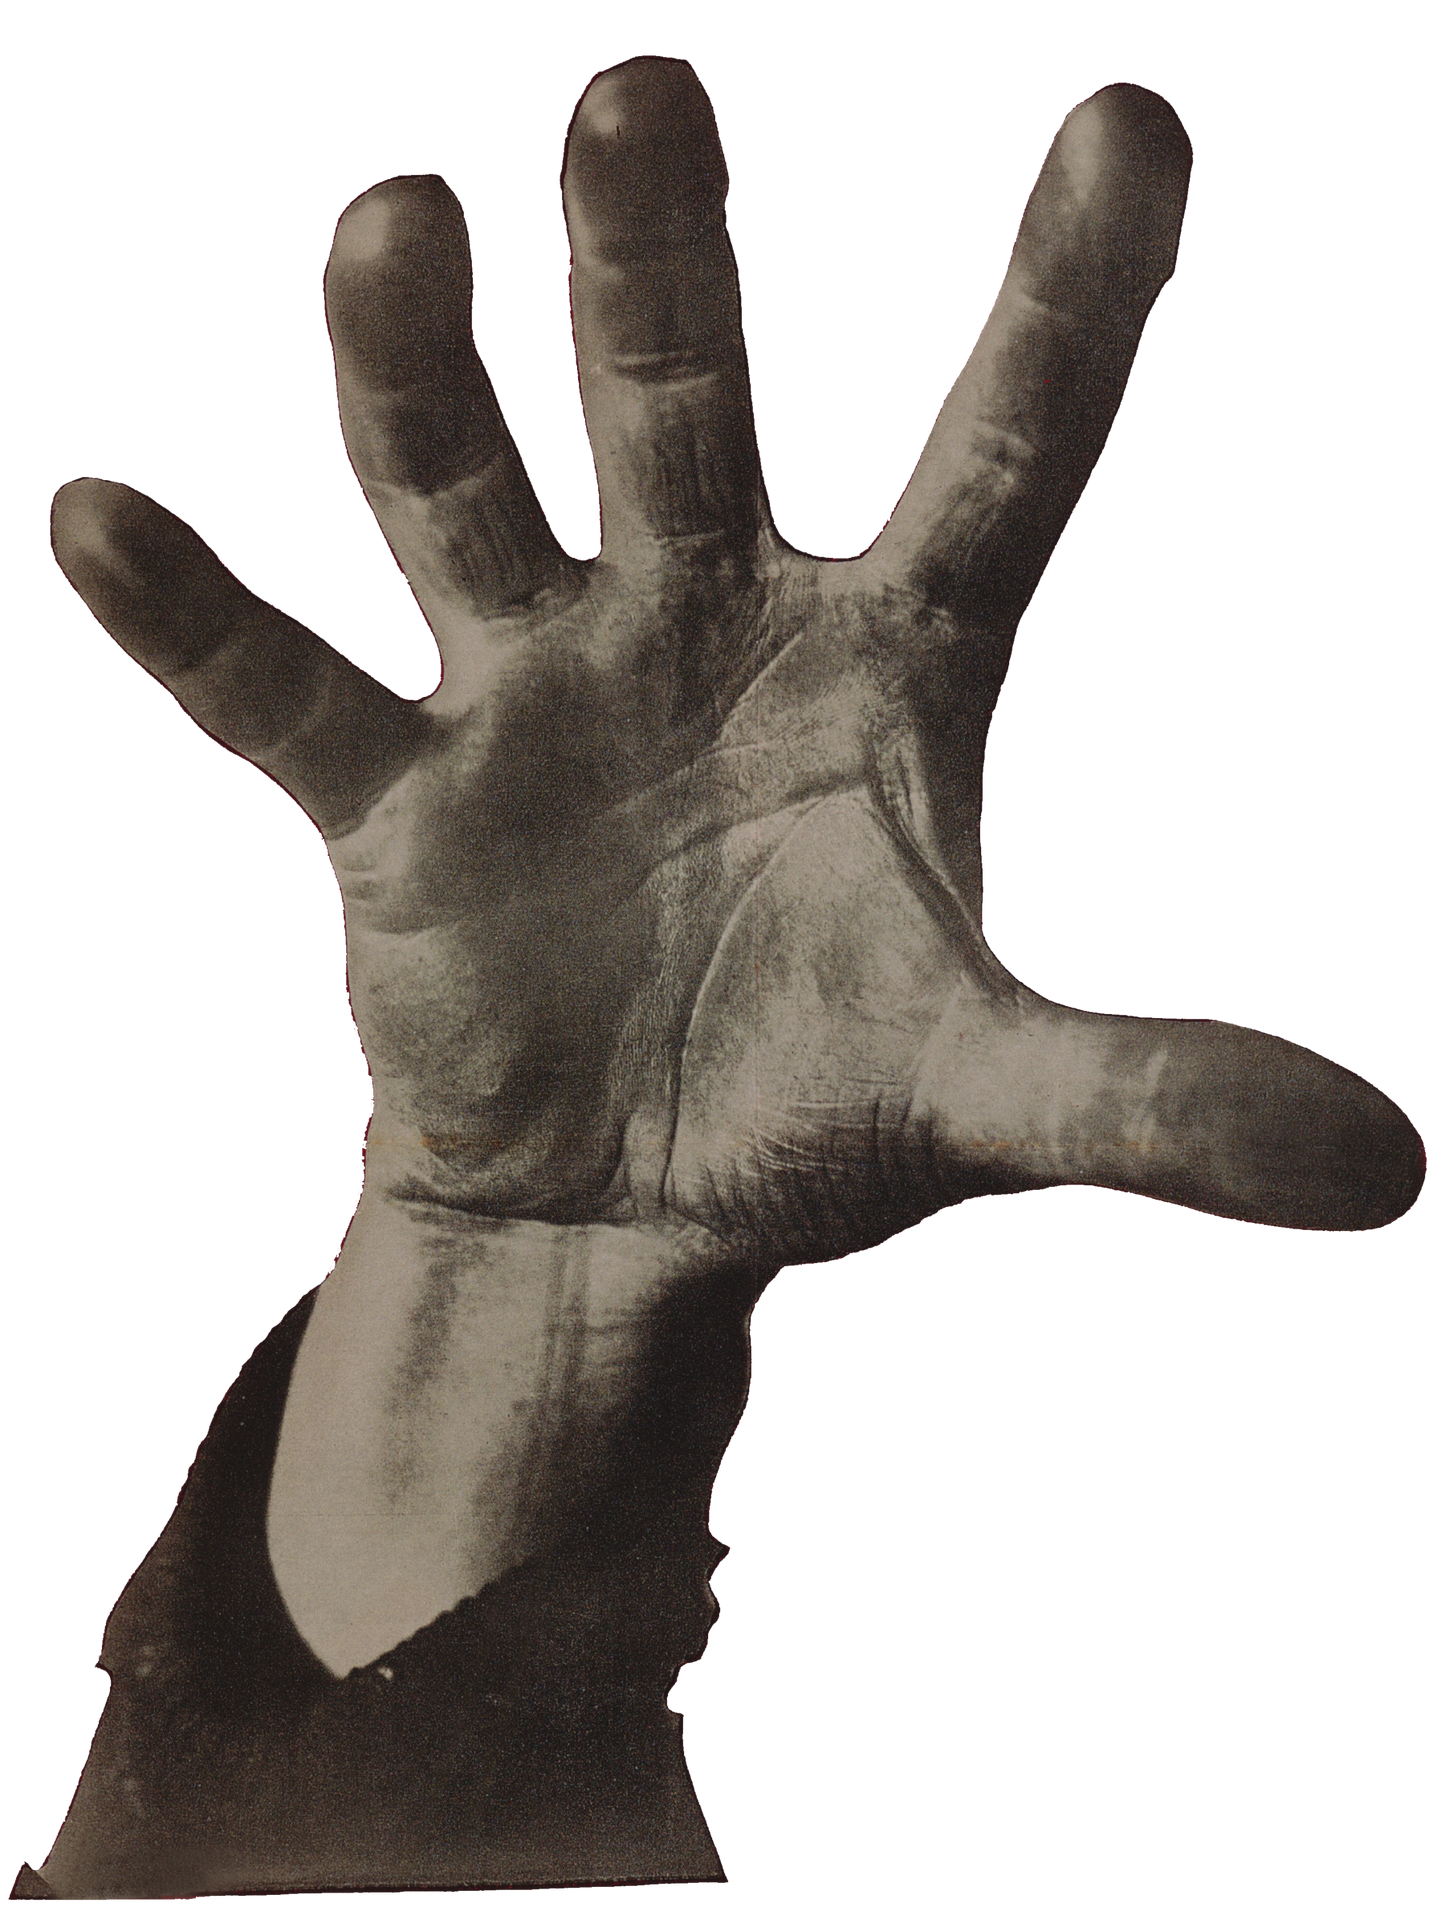 t-shirt hand. john heartfield "five fingers has the hand" "5 Finger hat die Hand" 